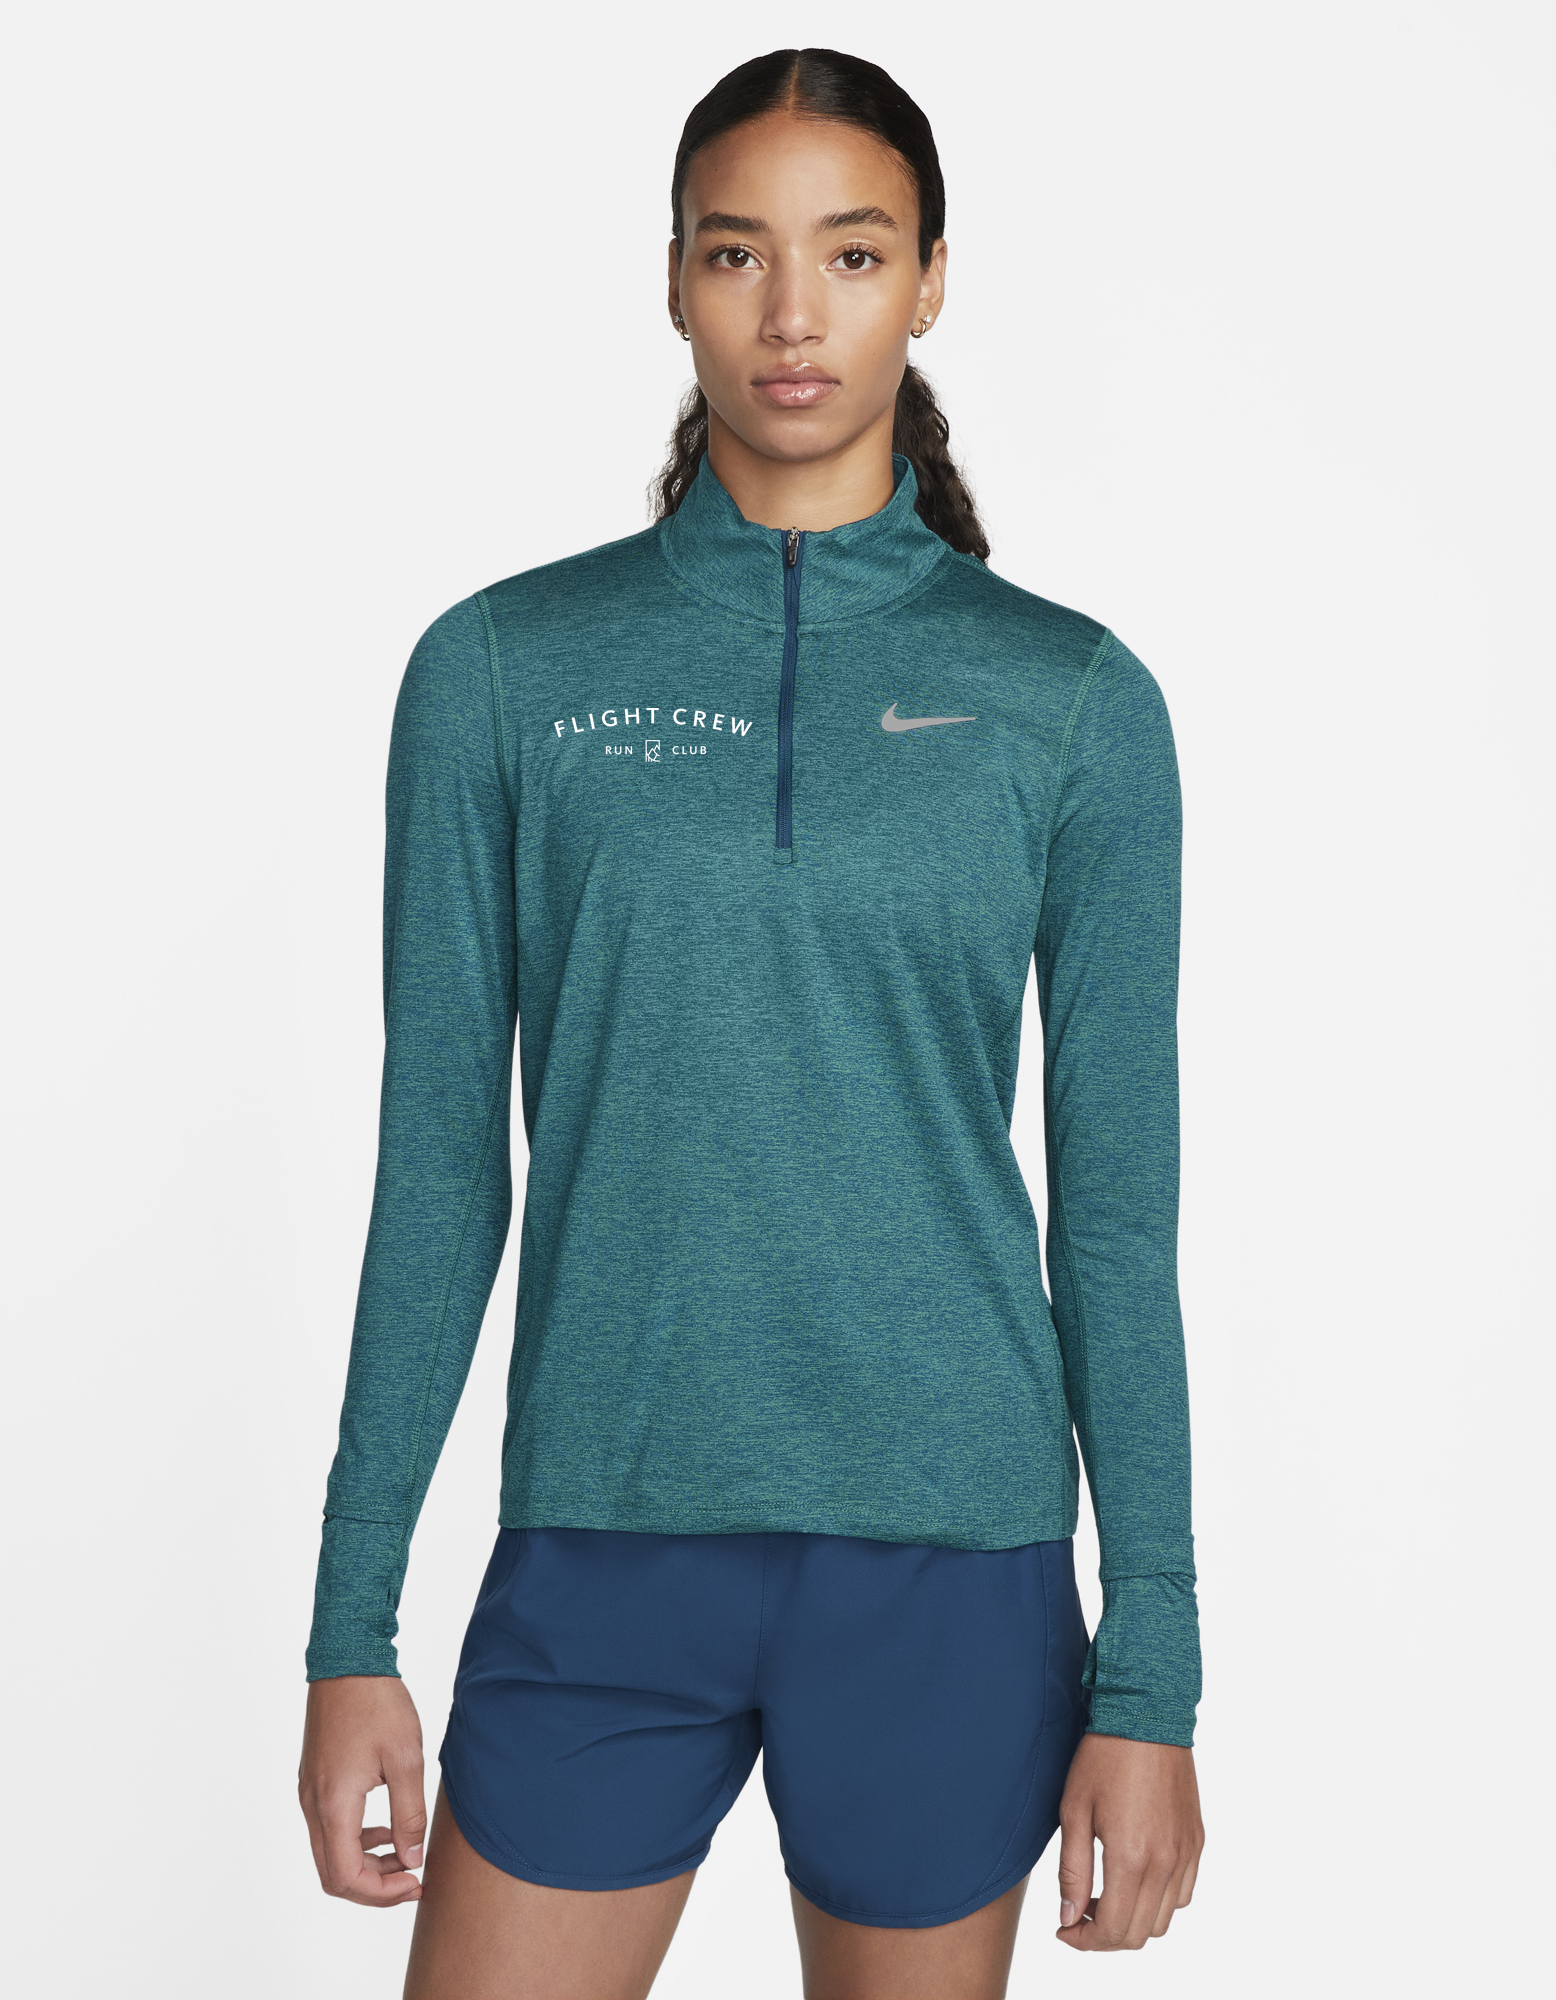 Nike 1/2 Zip Running Top - Women's | Vancouver Running Company Inc.